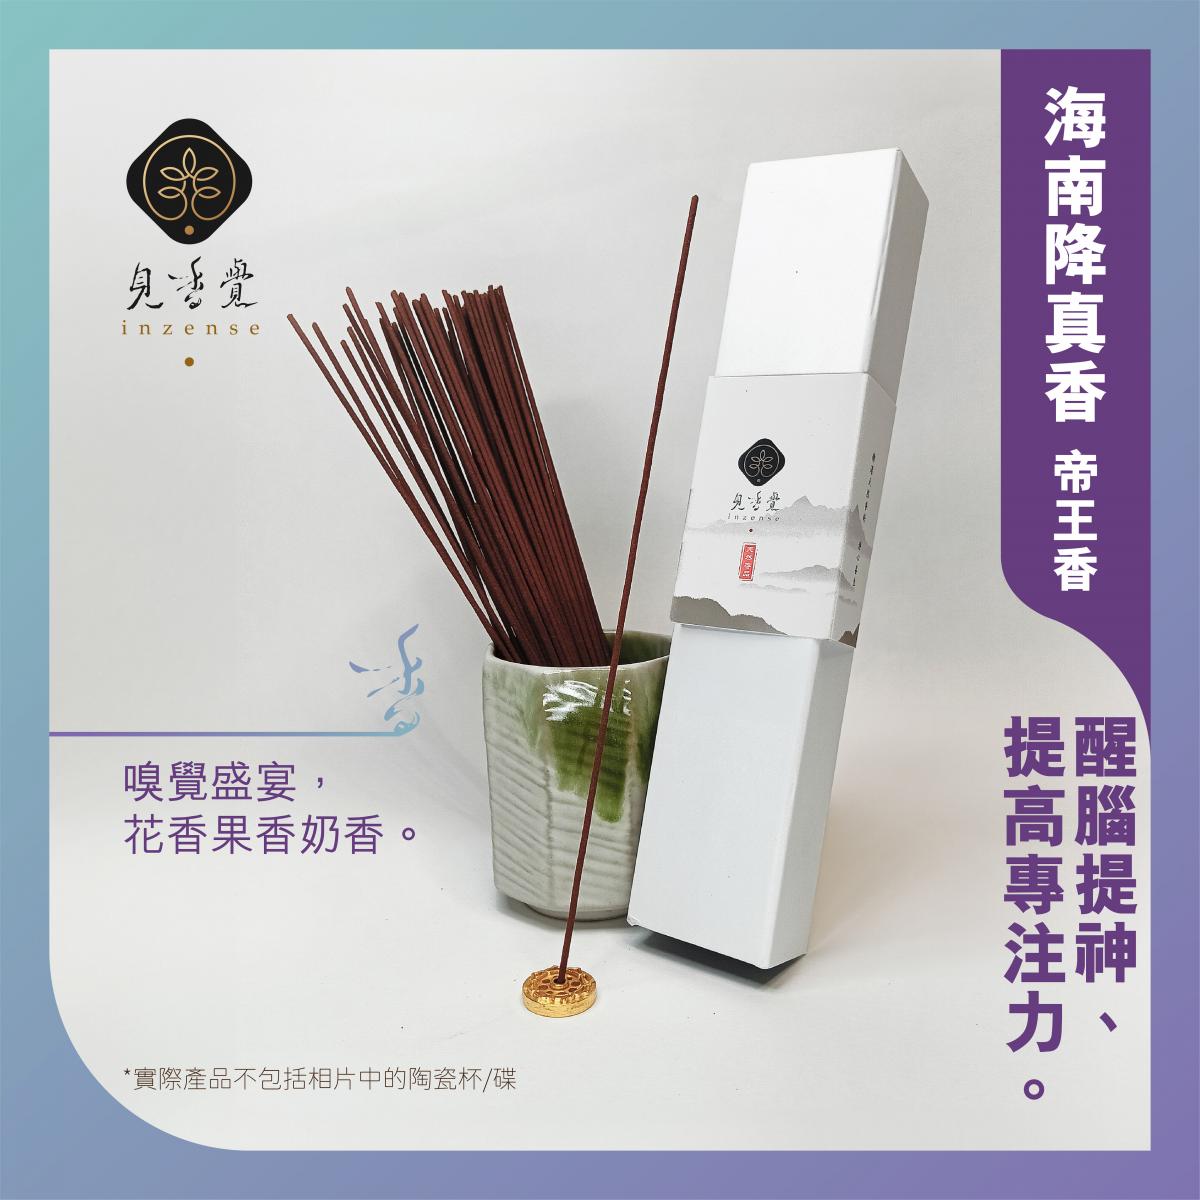 Hainan Lakawood (Dalbergia benthamii) - Diwang Xiang Incense Sticks (30g boxed)